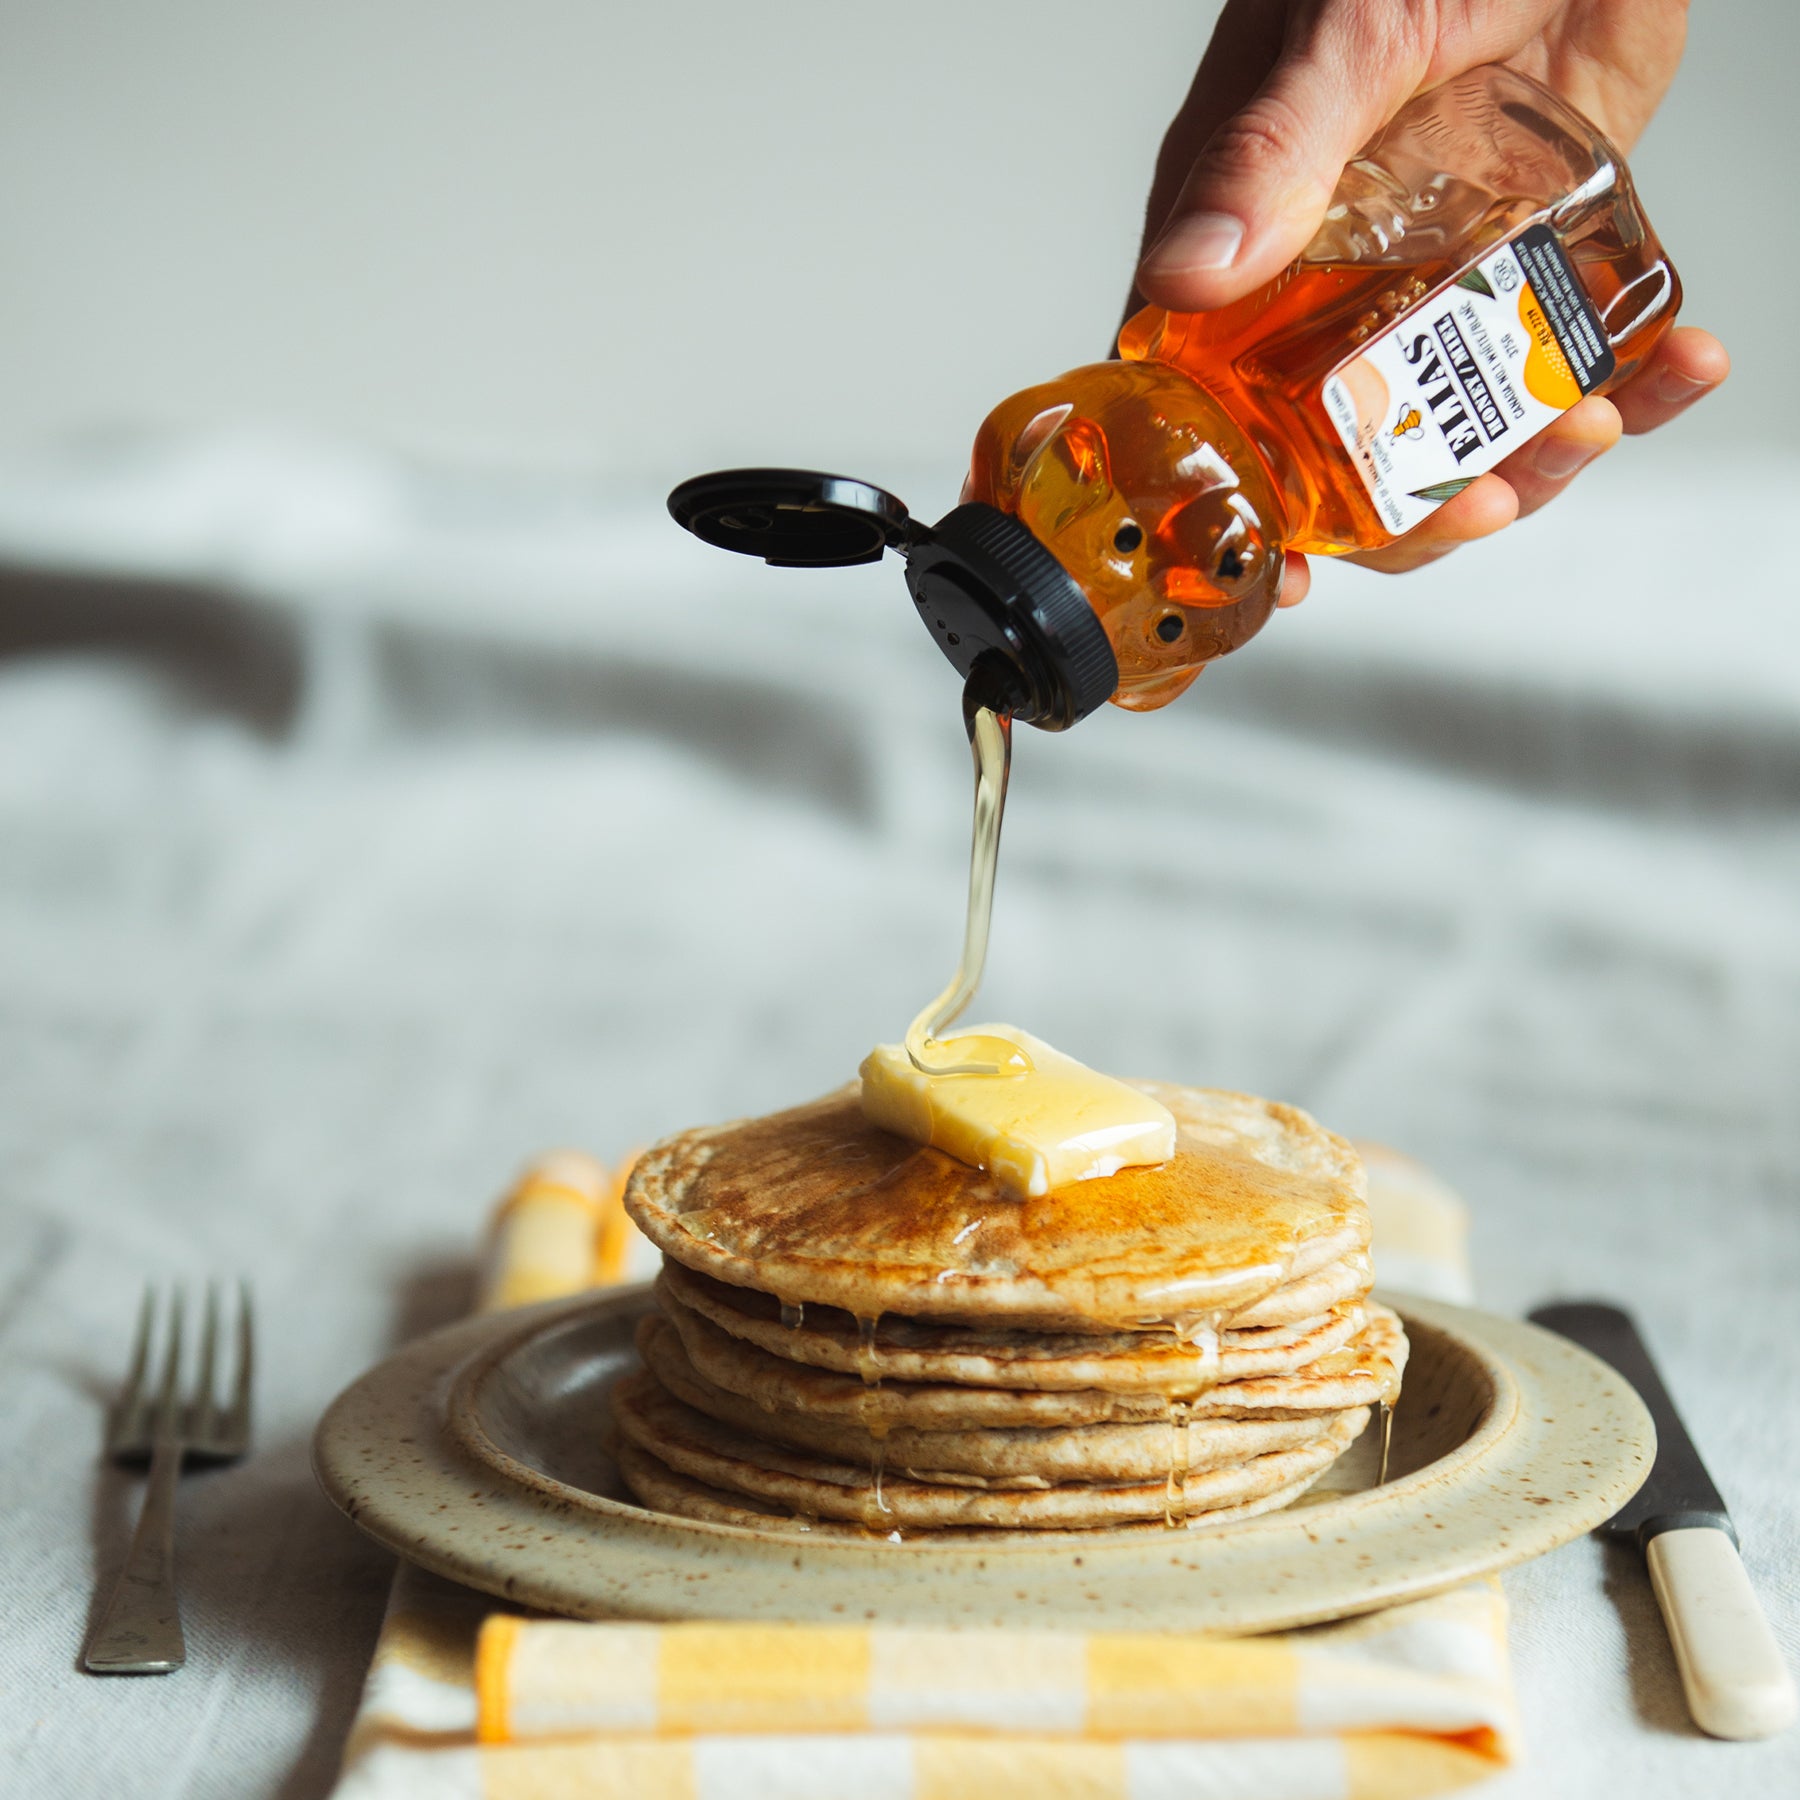 Image of Elias Honeybear pure liquid honey being poured onto pancakes.